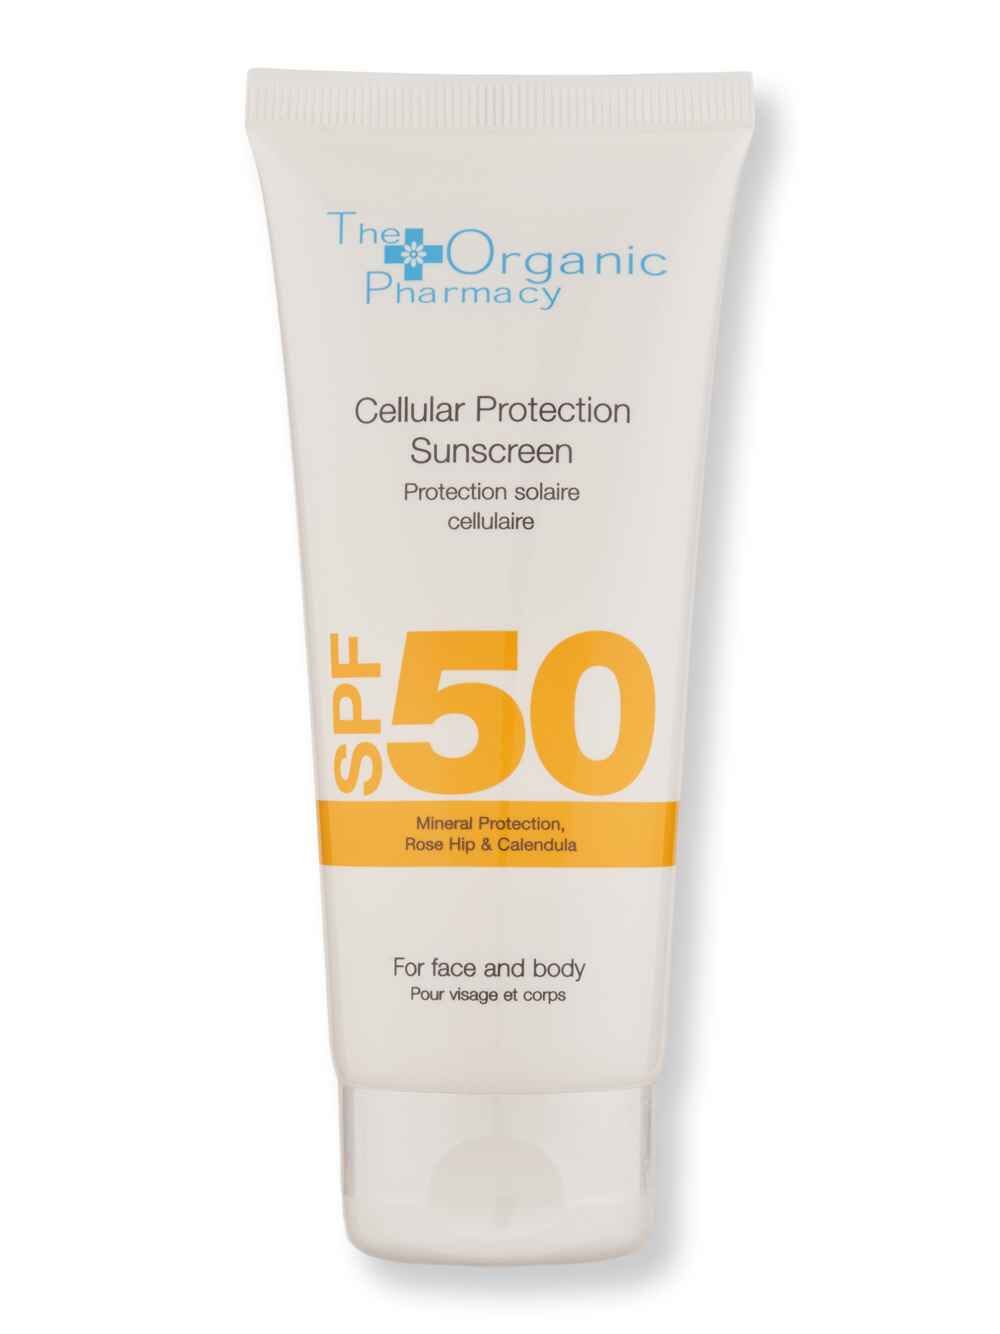 The Organic Pharmacy The Organic Pharmacy Cellular Protection Sun Cream SPF 50 100 ml Body Sunscreens 